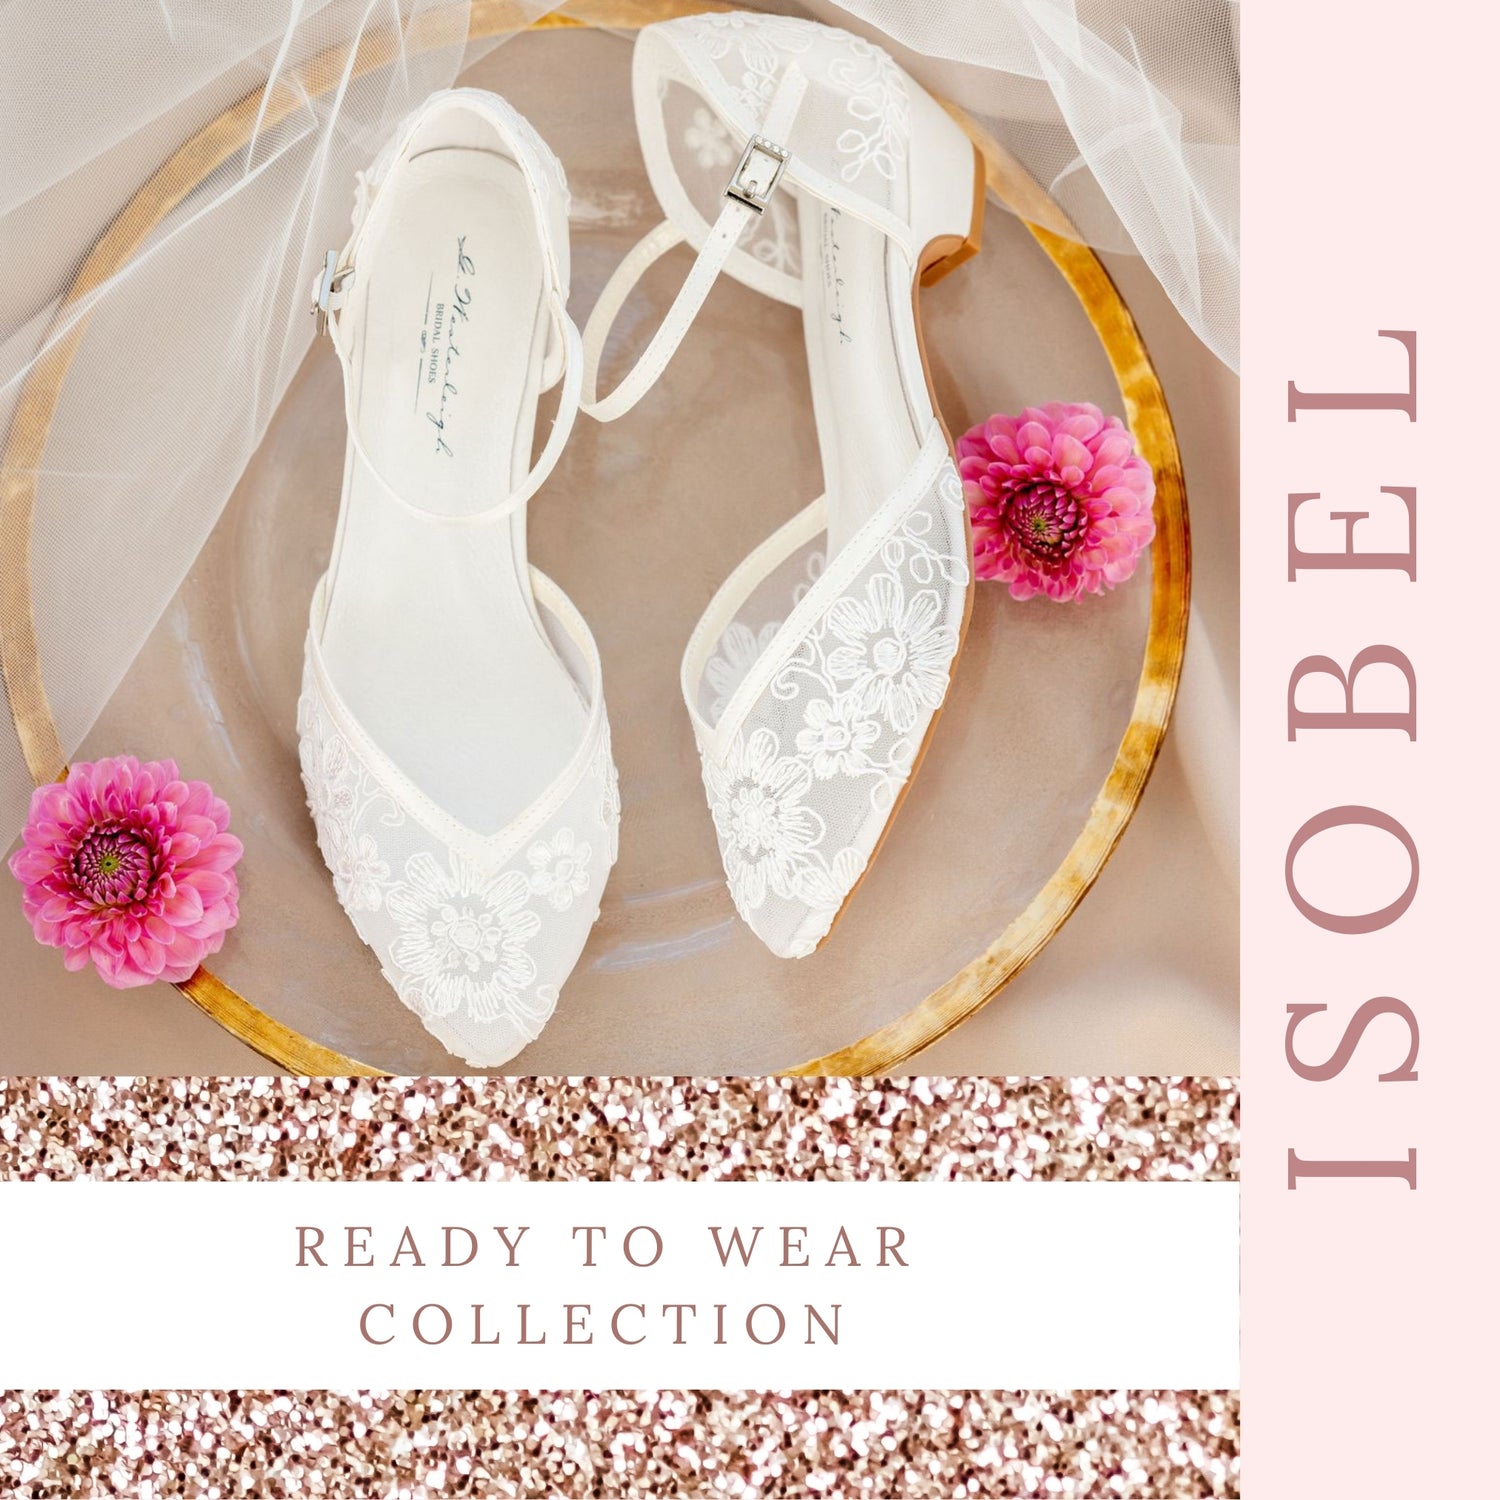 womens-wedding-shoes-low-heel